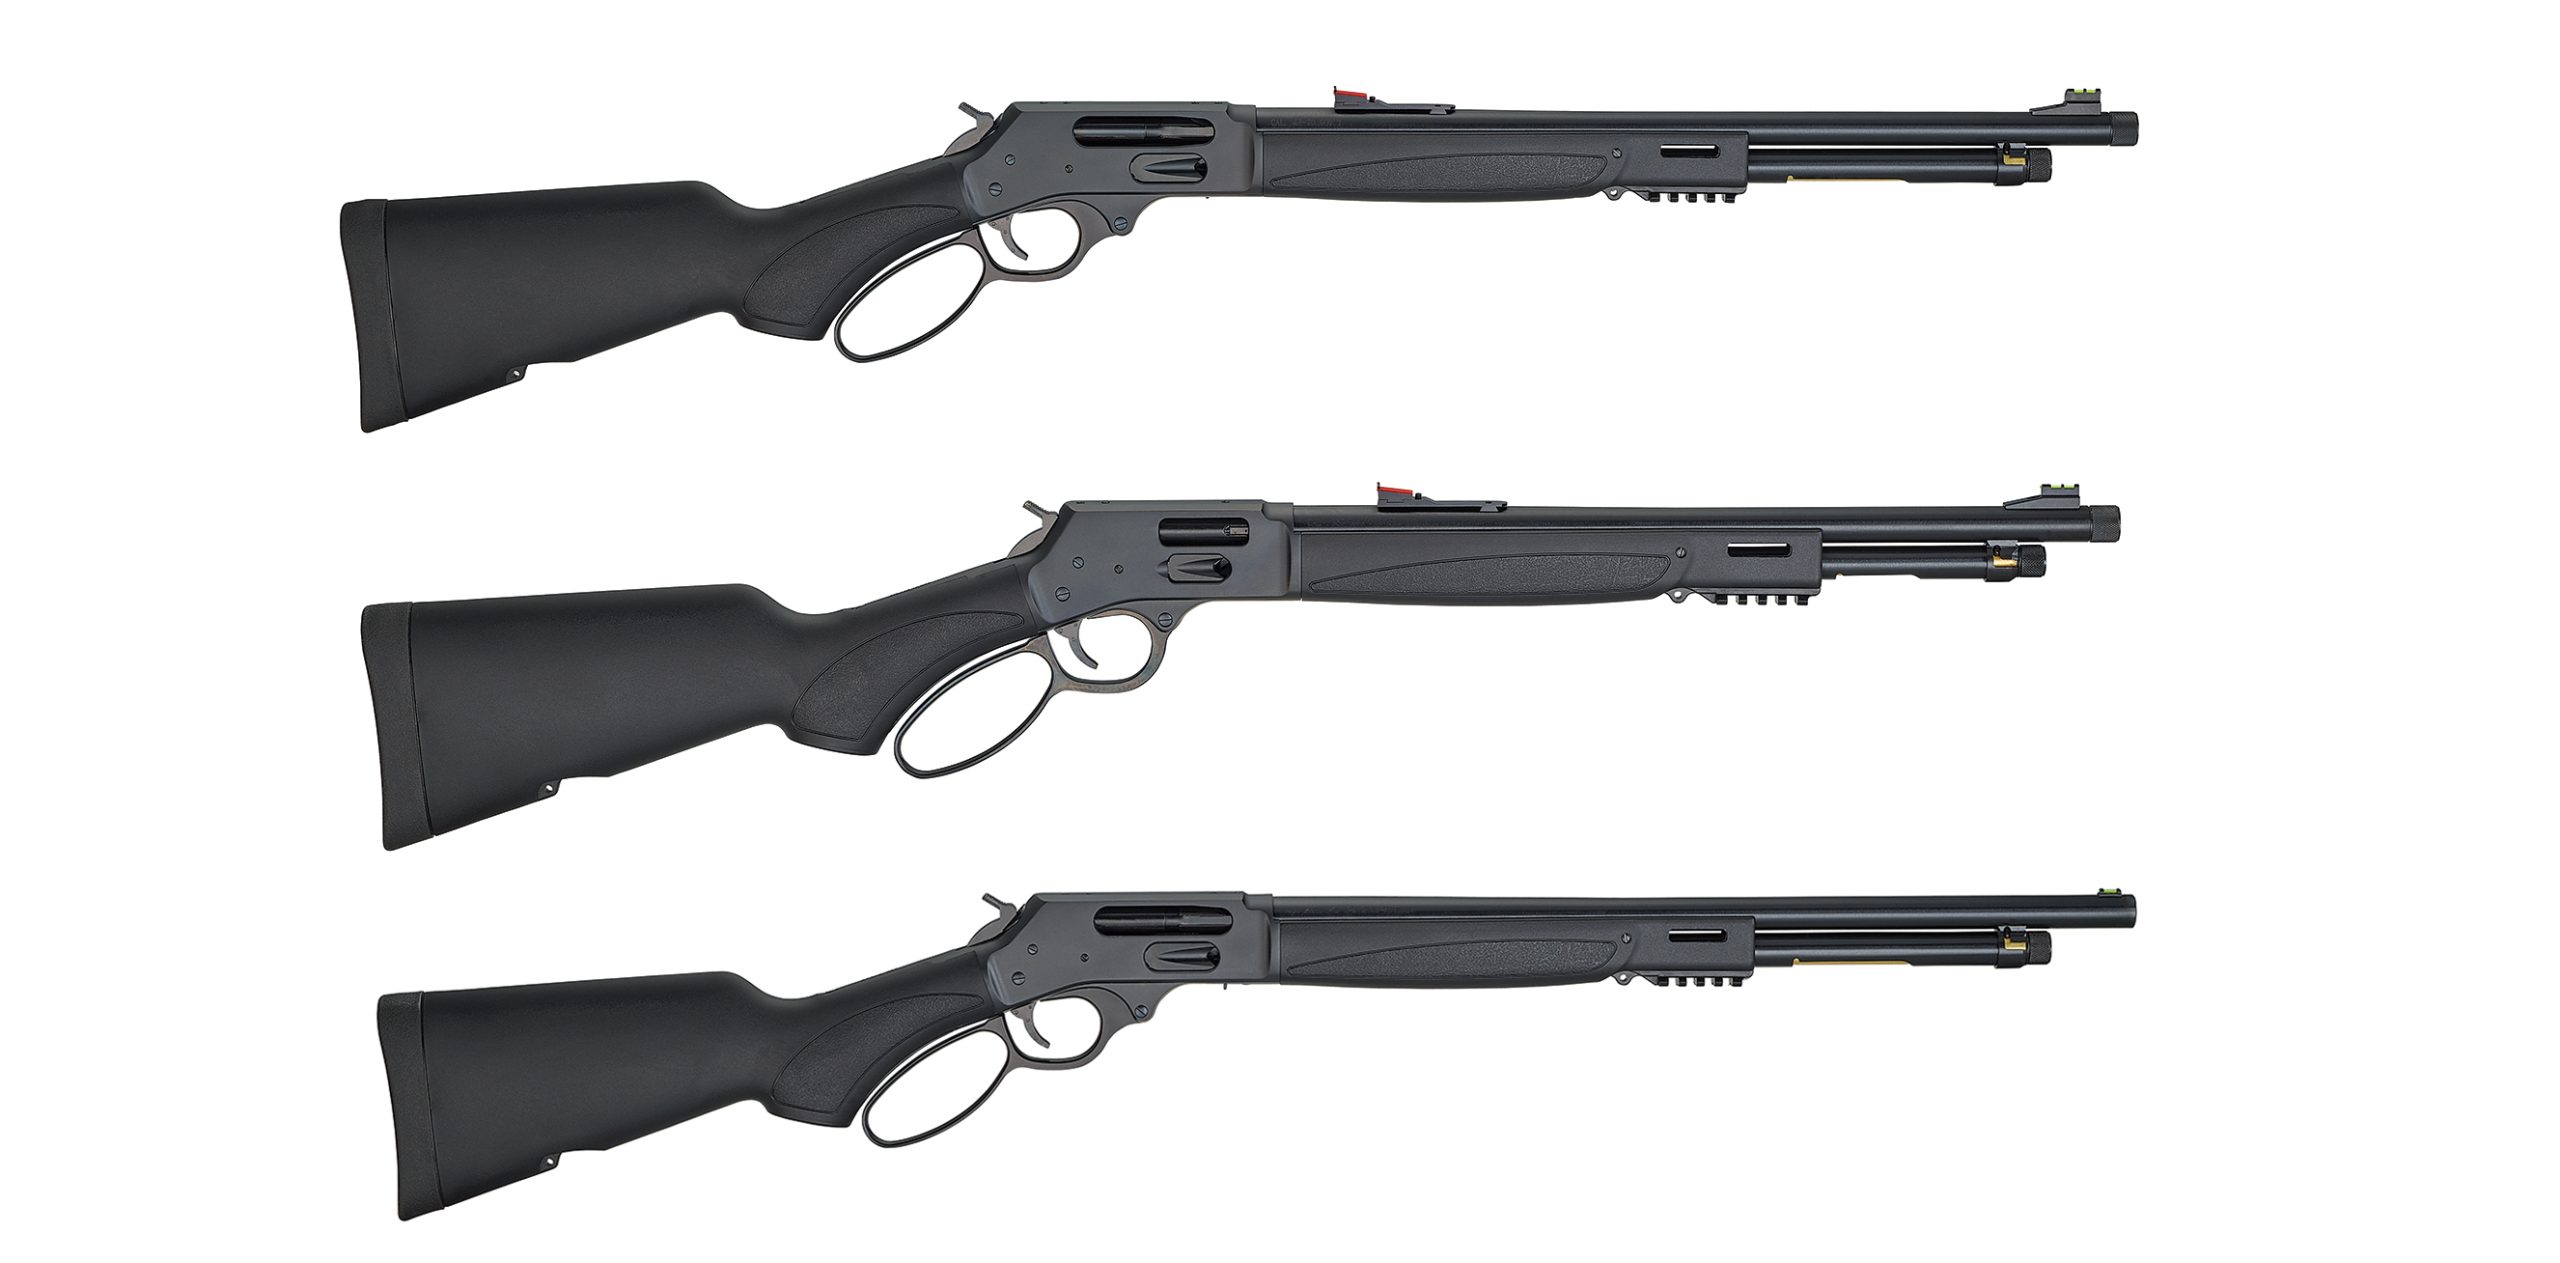 Big Boy X serija puaka se nudi u revolverskim kalibrima .44 Magnum, .45 Colt i  .357 Magnum.38 Special, cevi su duge 44cm.jpg